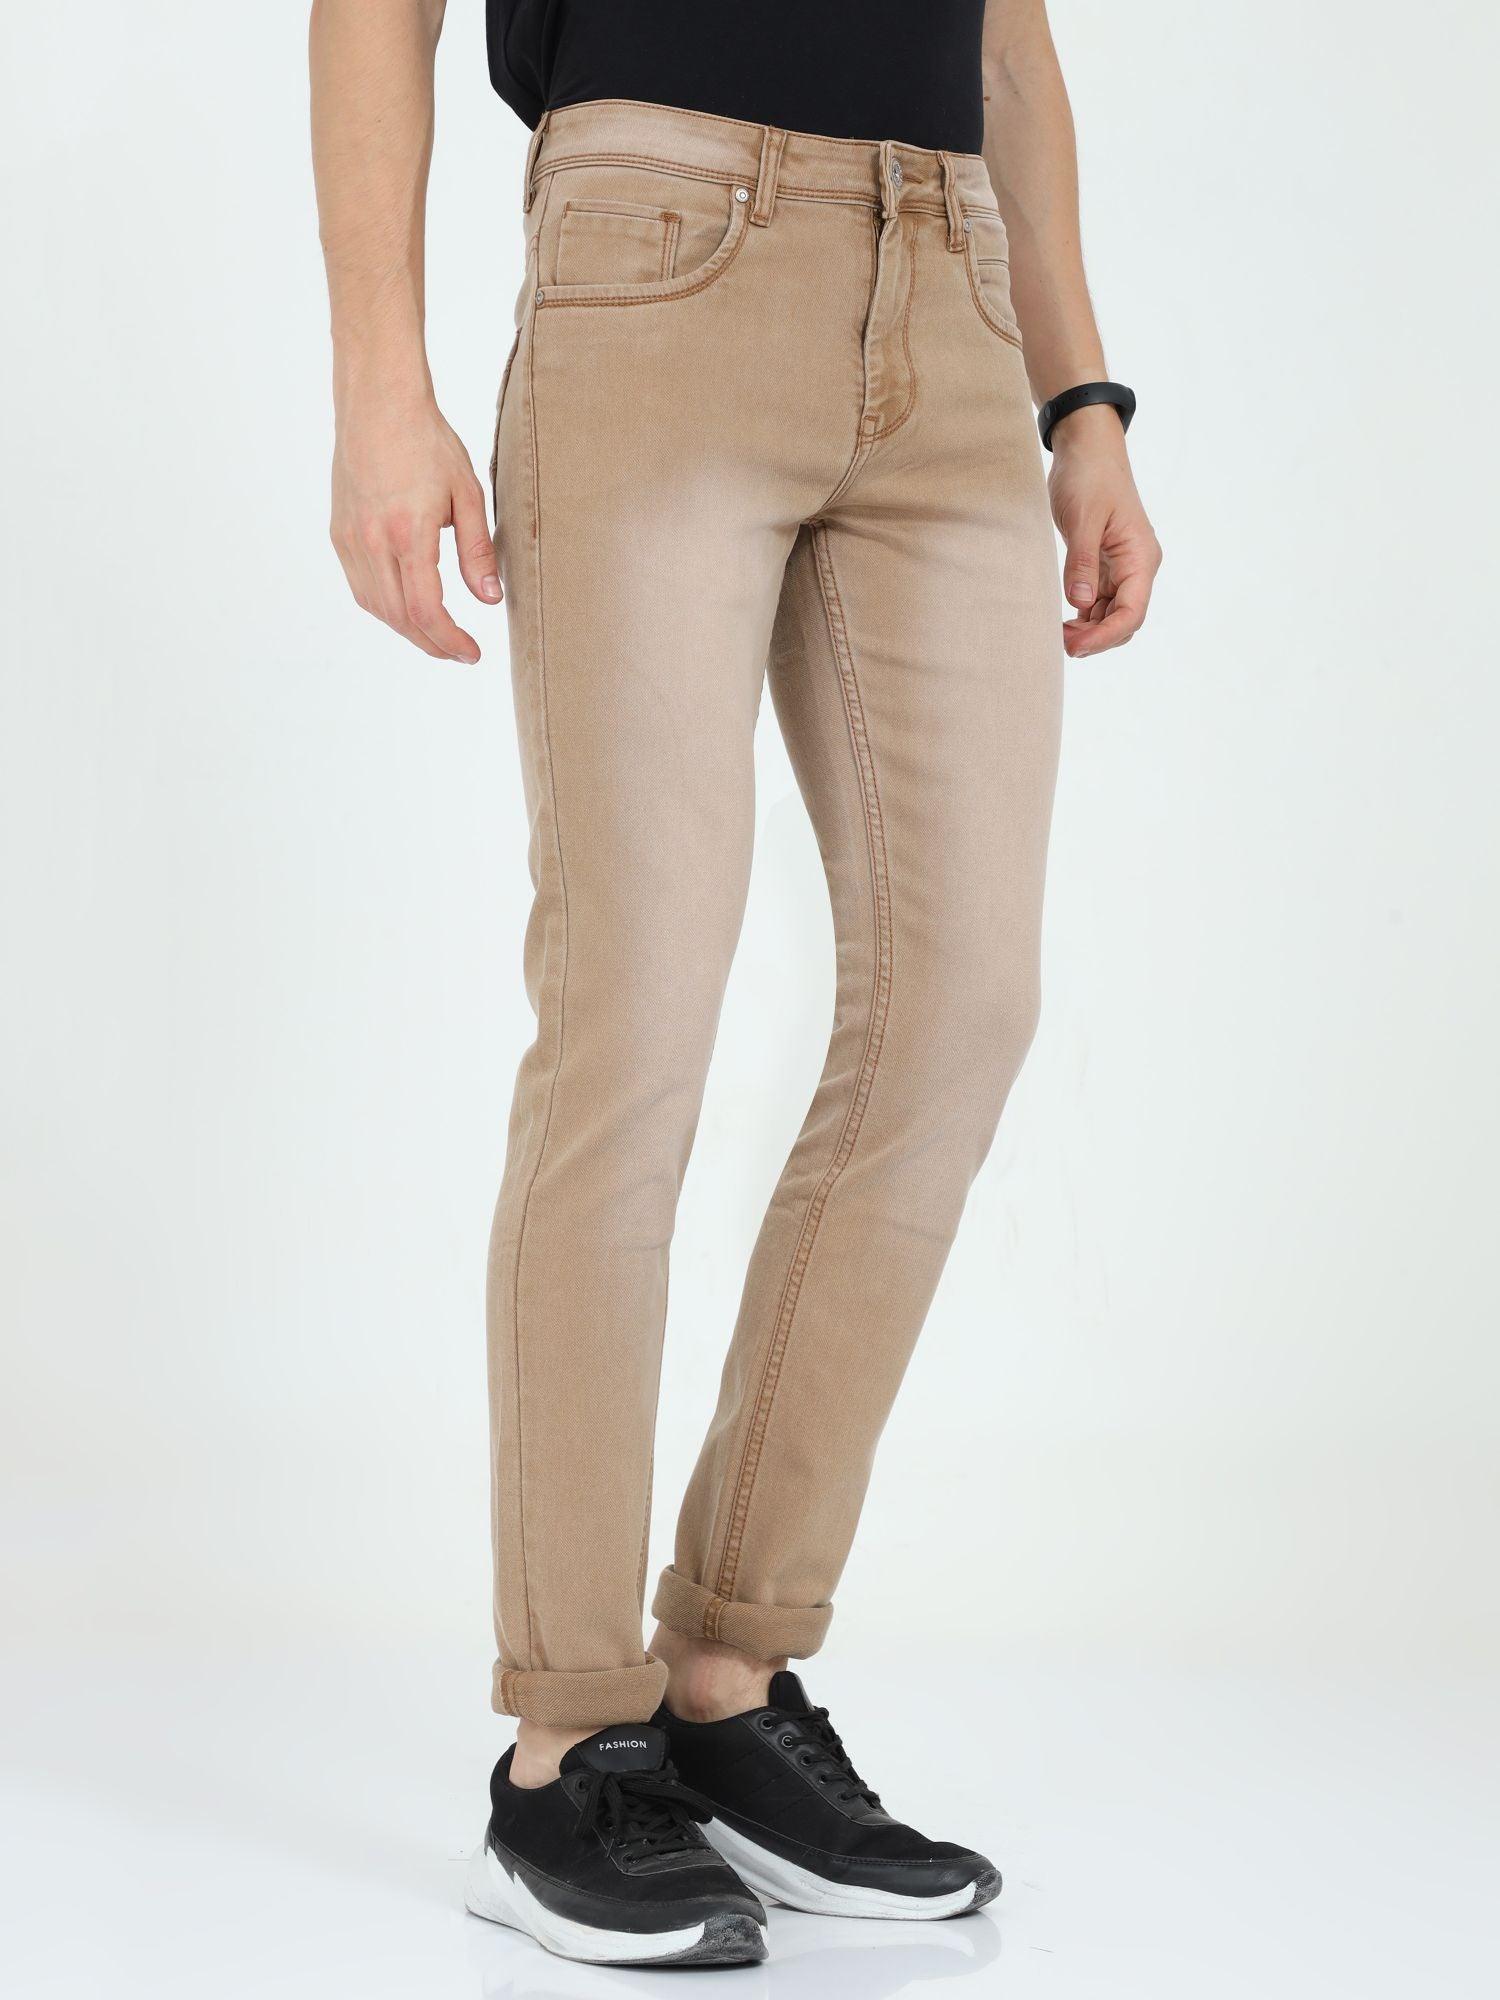 Urbano Fashion Mens Khaki Slim Fit Washed Jeans Stretchable aveps700spr khaki28  Amazonin Clothing  Accessories